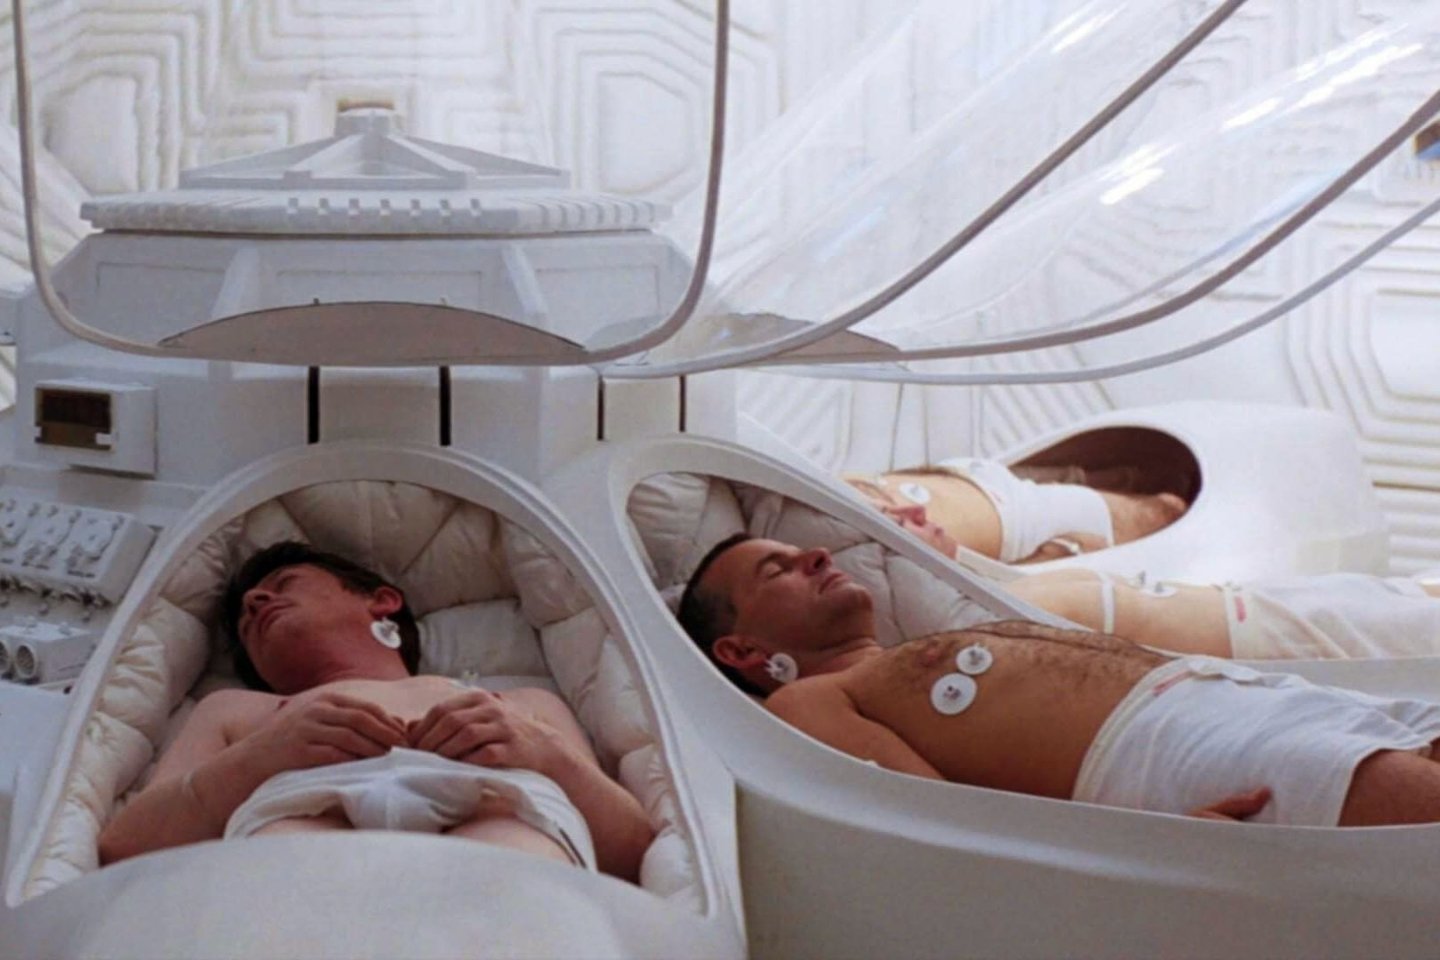  Kadras iš filmo „Alien“. Erdvėlaivio „Nostromo“ įgula bunda iš hibernacinio miego.<br> 20th Century Fox iliustr.